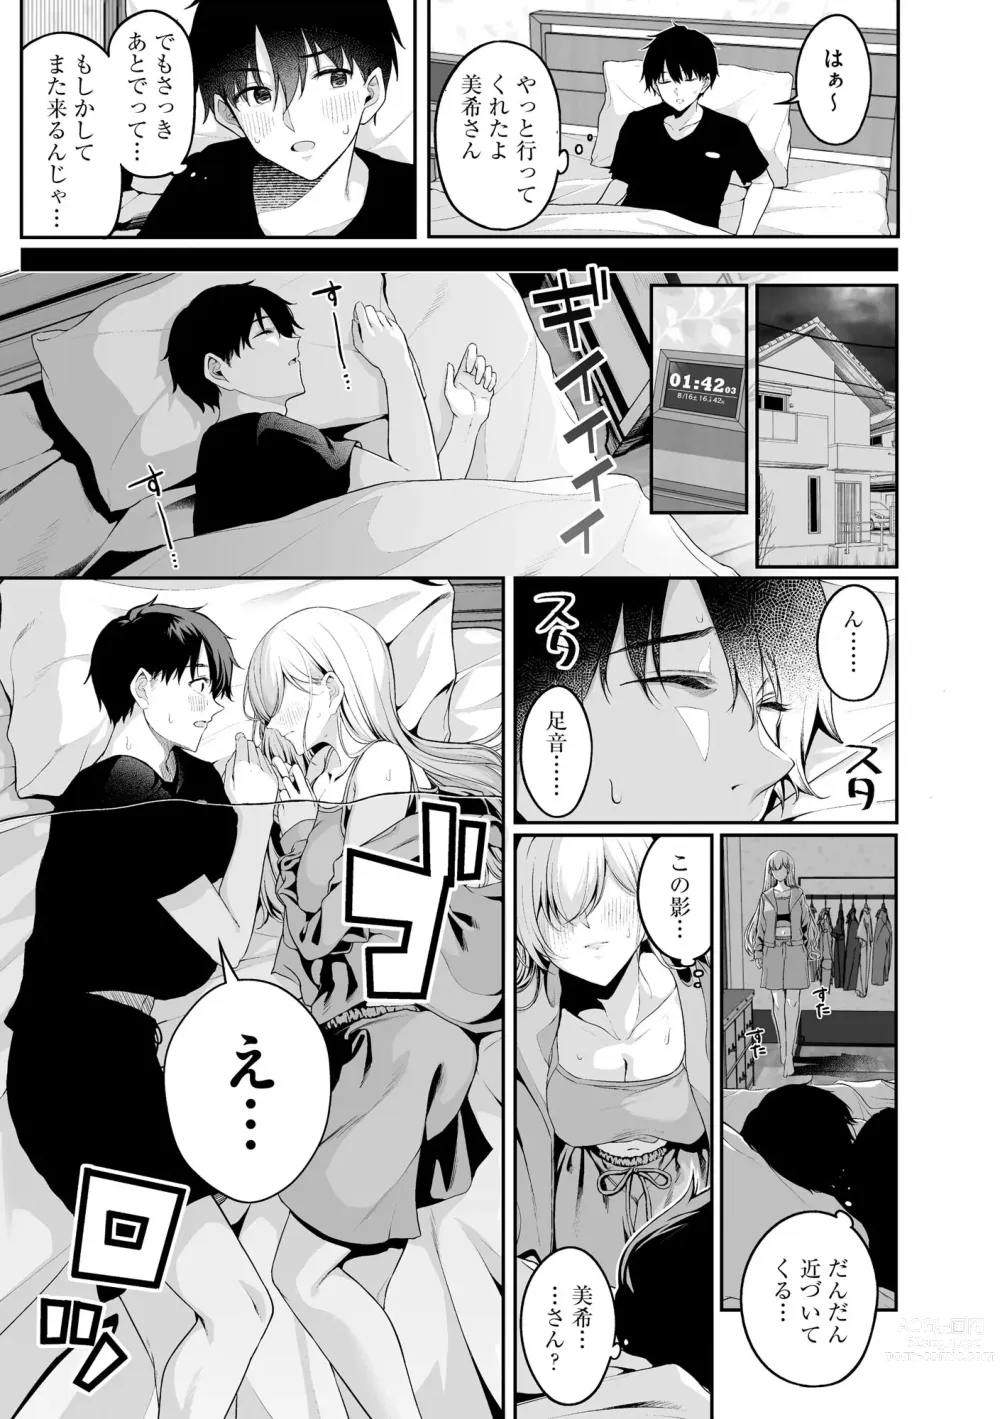 Page 9 of manga Cyberia Plus Vol. 17